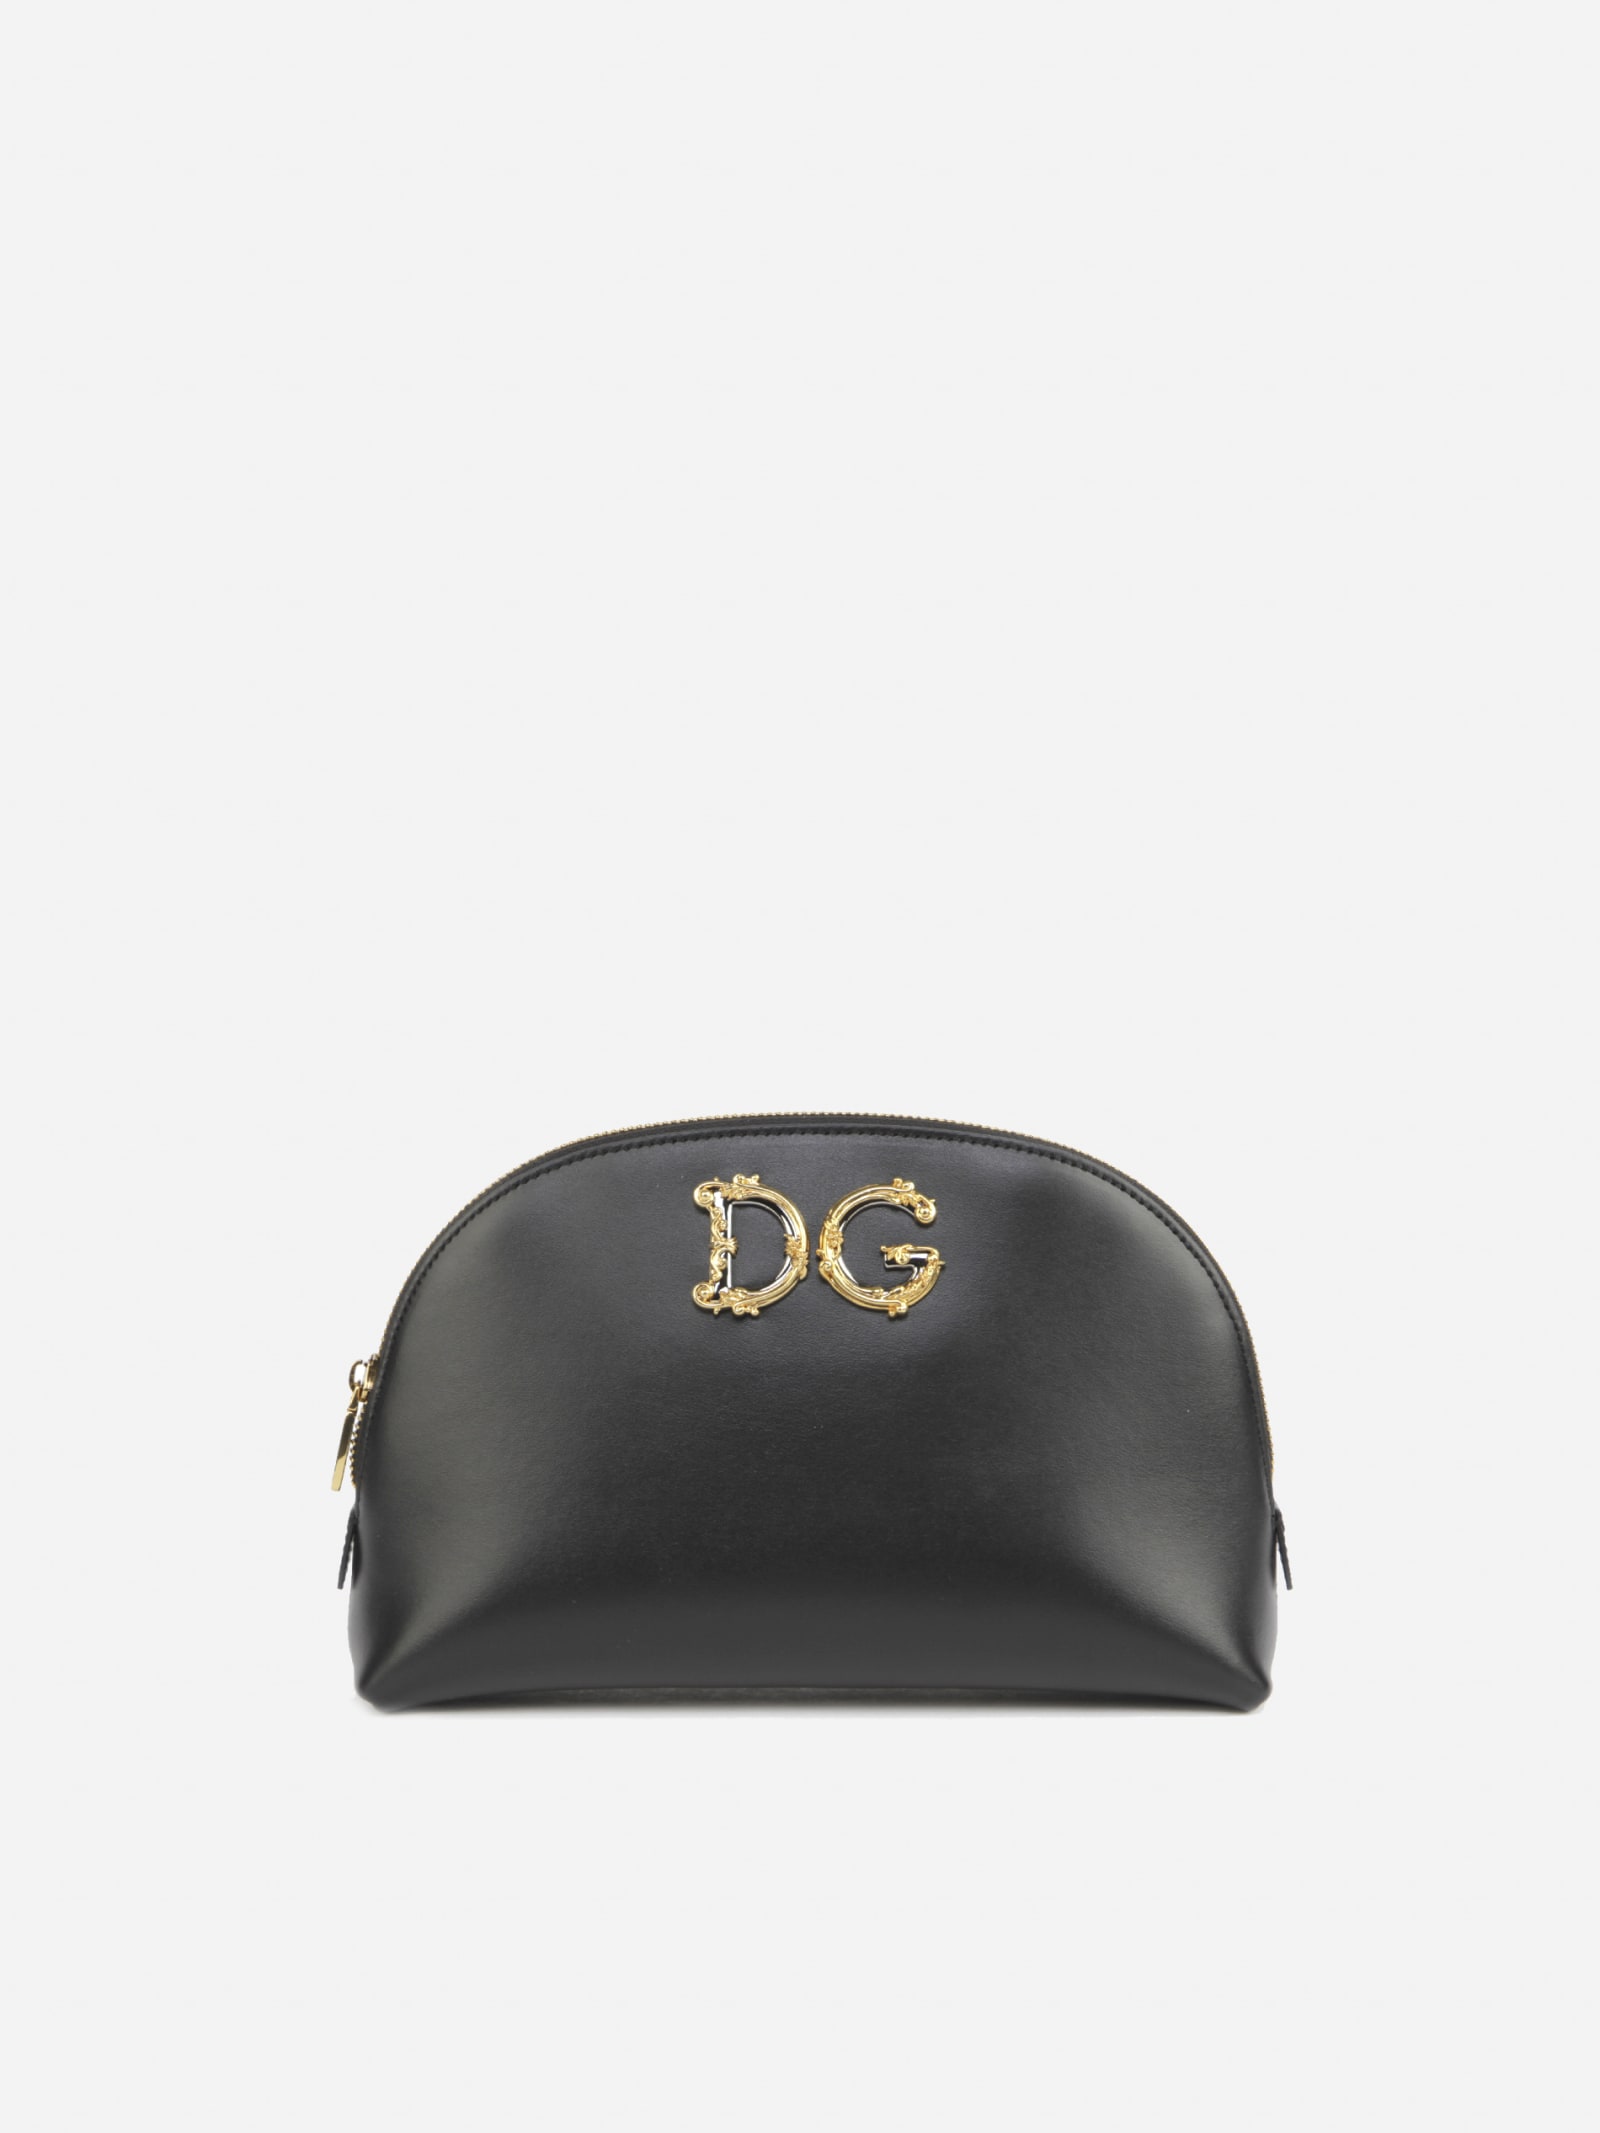 Dolce & Gabbana Necessaire Made Of Calfskin With Baroque Dg Logo